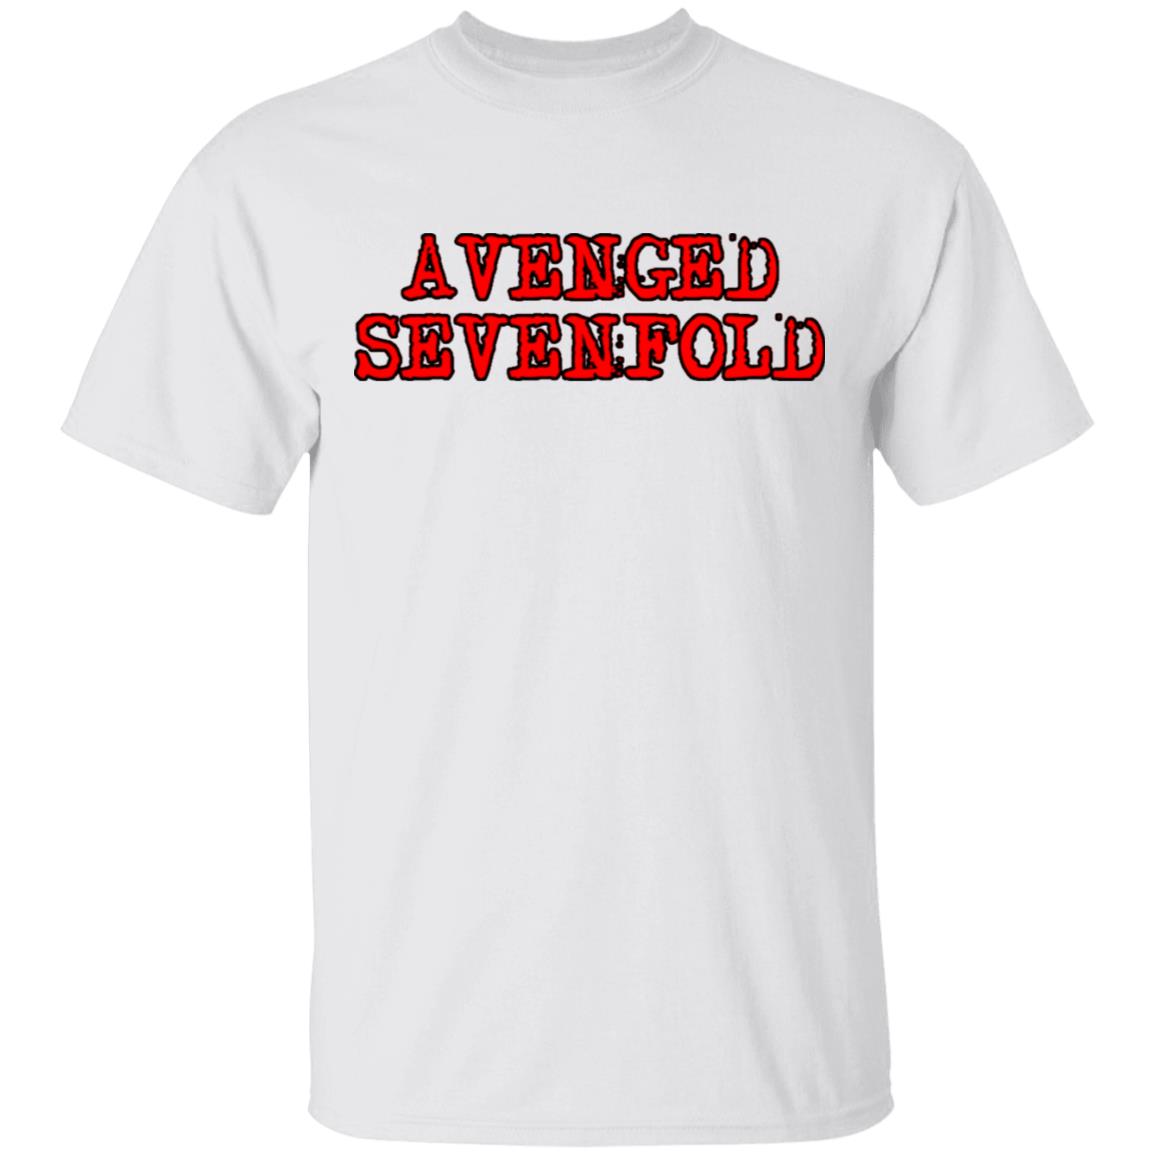 Avenged Sevenfold Merch Logo White Shirt
#AvengedSevenfold #Merchandise #BandMerch #BandShirt #MusicFashion #RockFashion #WhiteShirt #GraphicTee #ConcertWear #AlternativeFashion #RockMerch #TipateeFashion

tipatee.com/product/avenge…